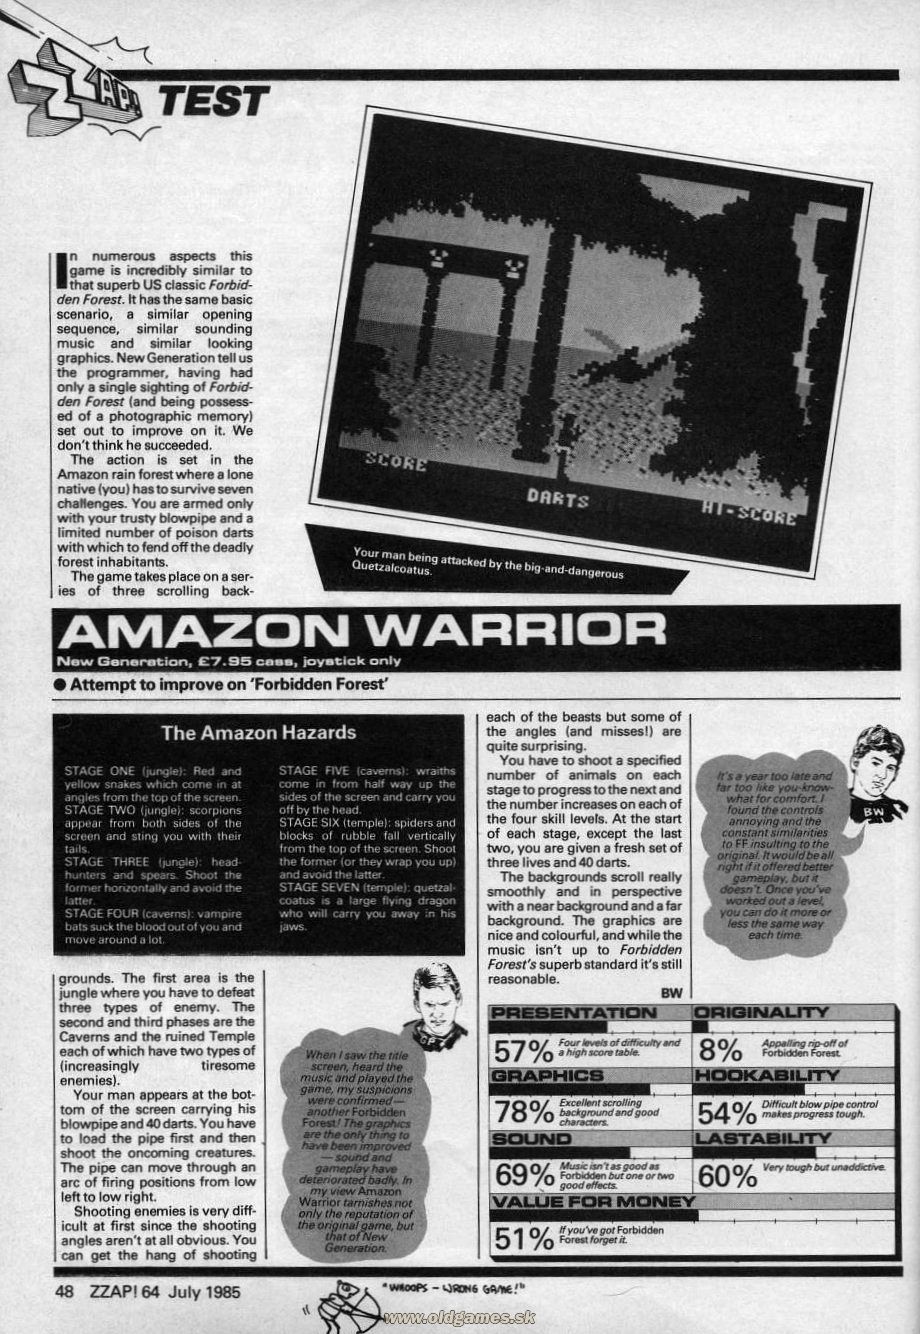 Amazon Warrior (51%)